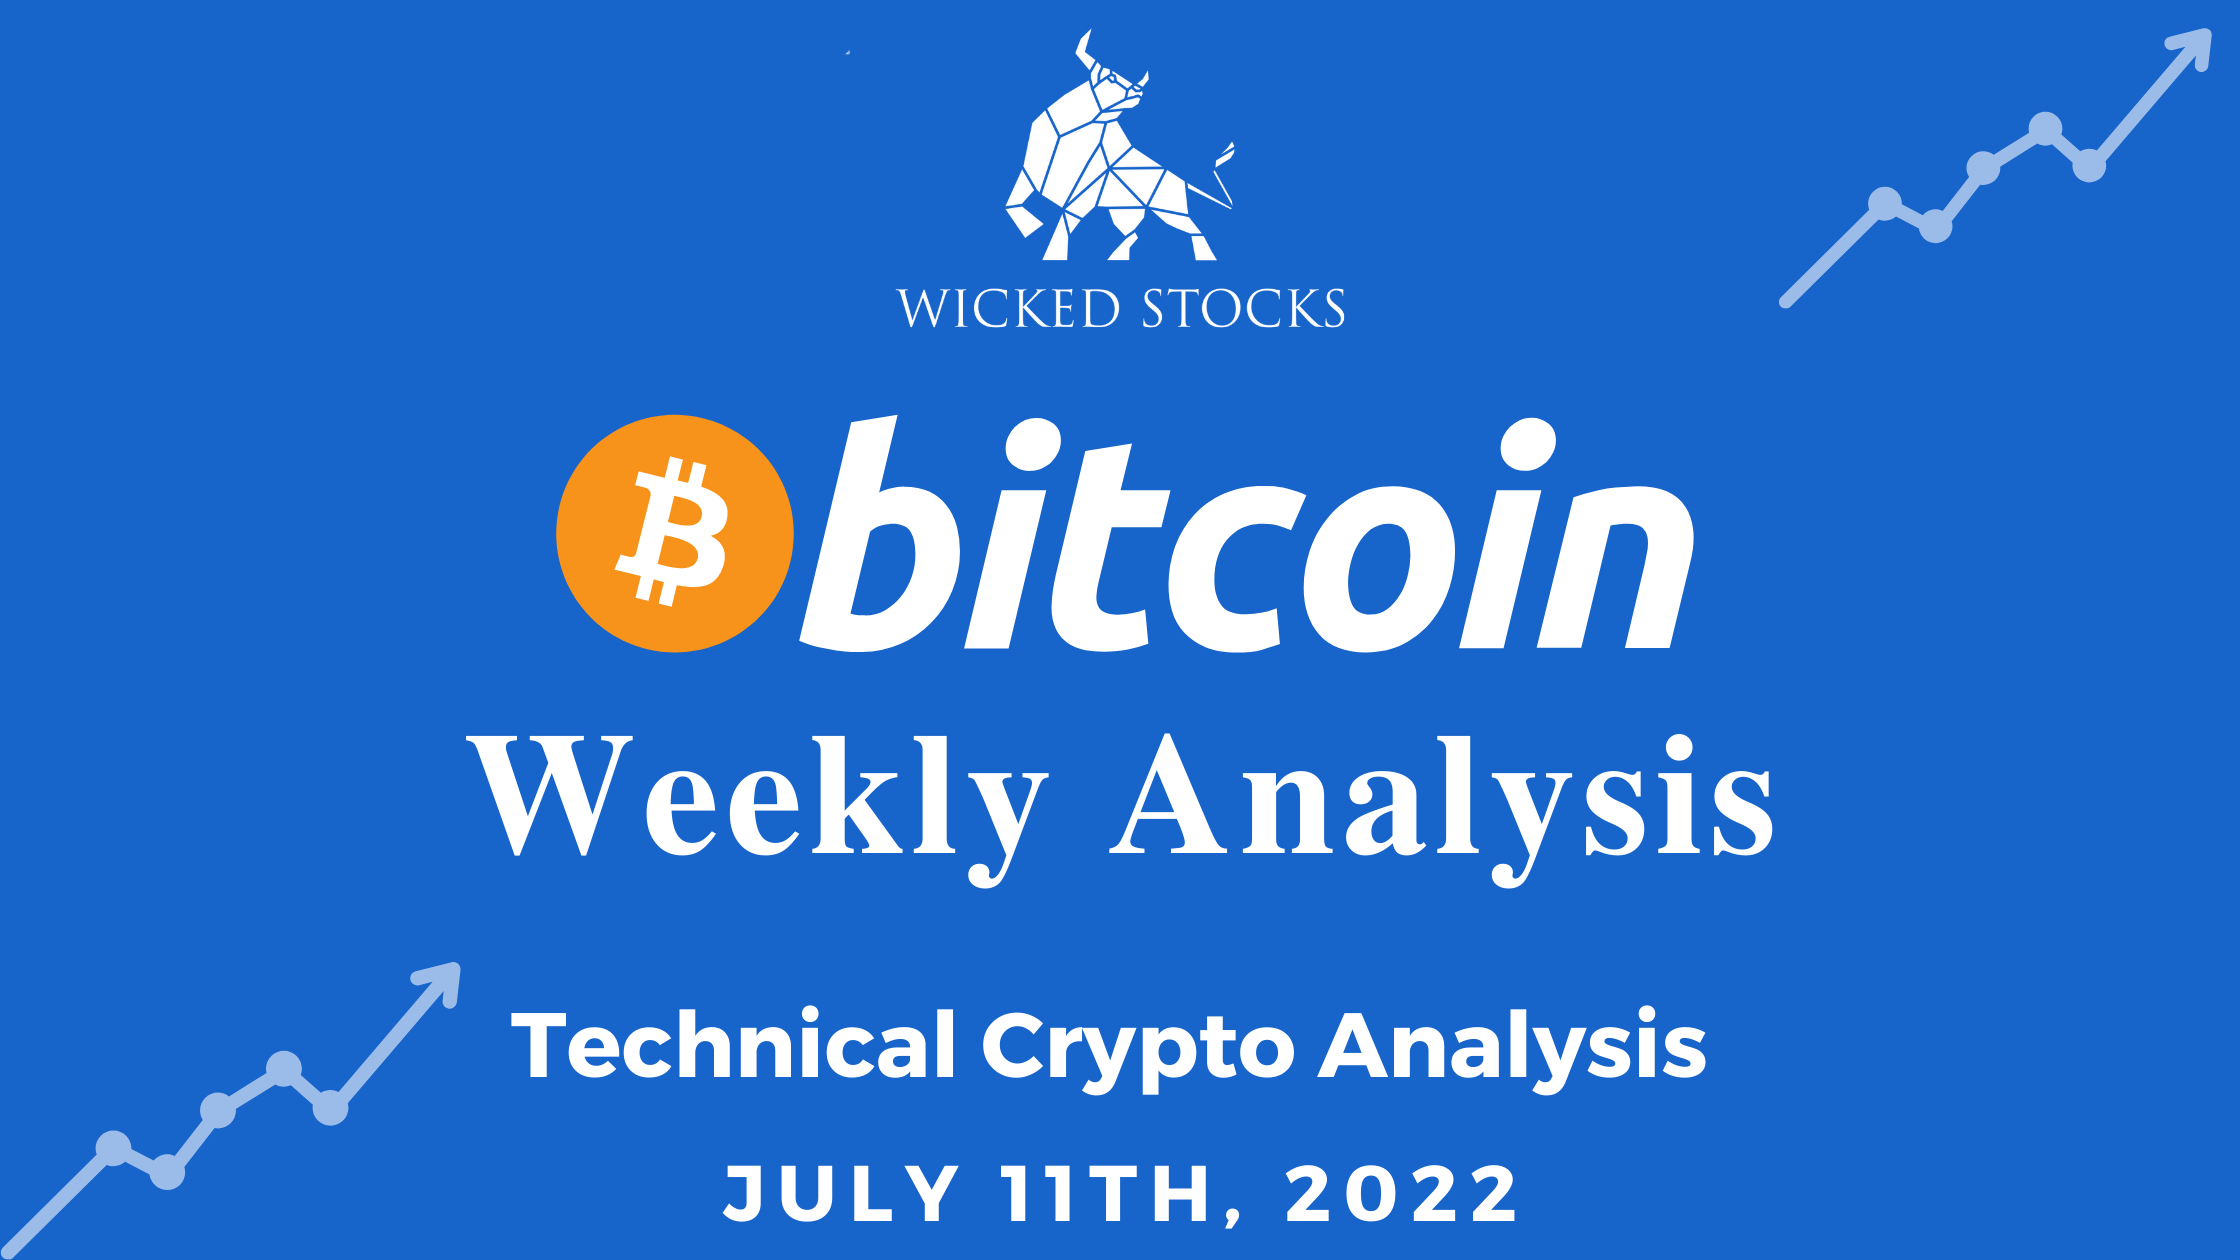 Bitcoin (BTC) Weekly Analysis 7/11/22